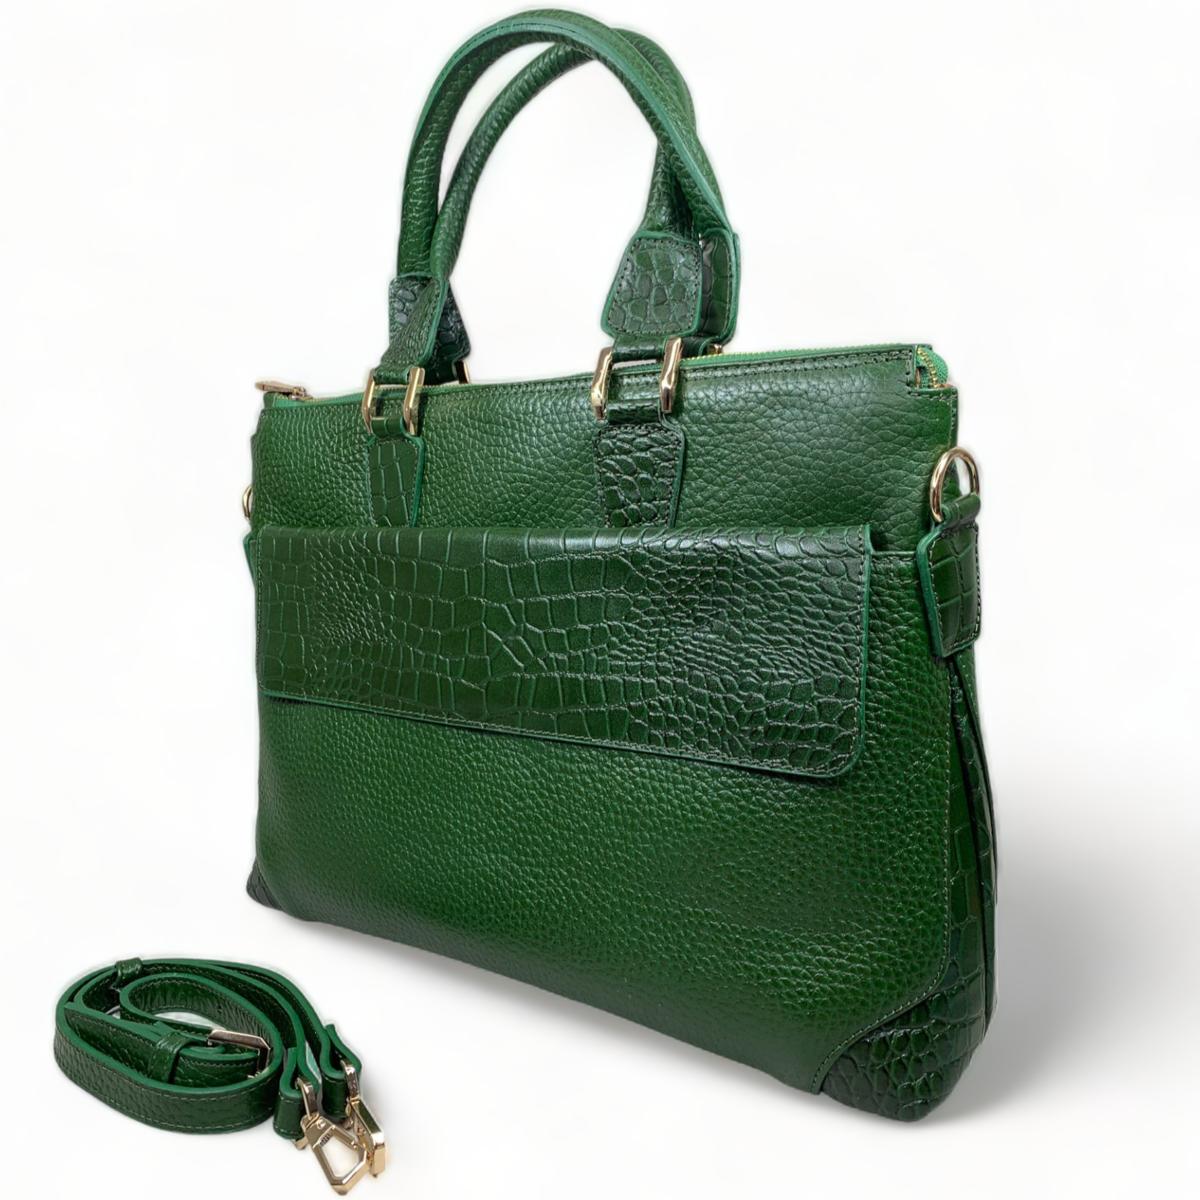 LeatherLuxe - Green Leather Unisex Bag; Laptop Bag; Large Bag Genuine leather Designer Premium leather bag for women leather hobo tote messenger bag Leather Accessories Leather Shop Leather Goods